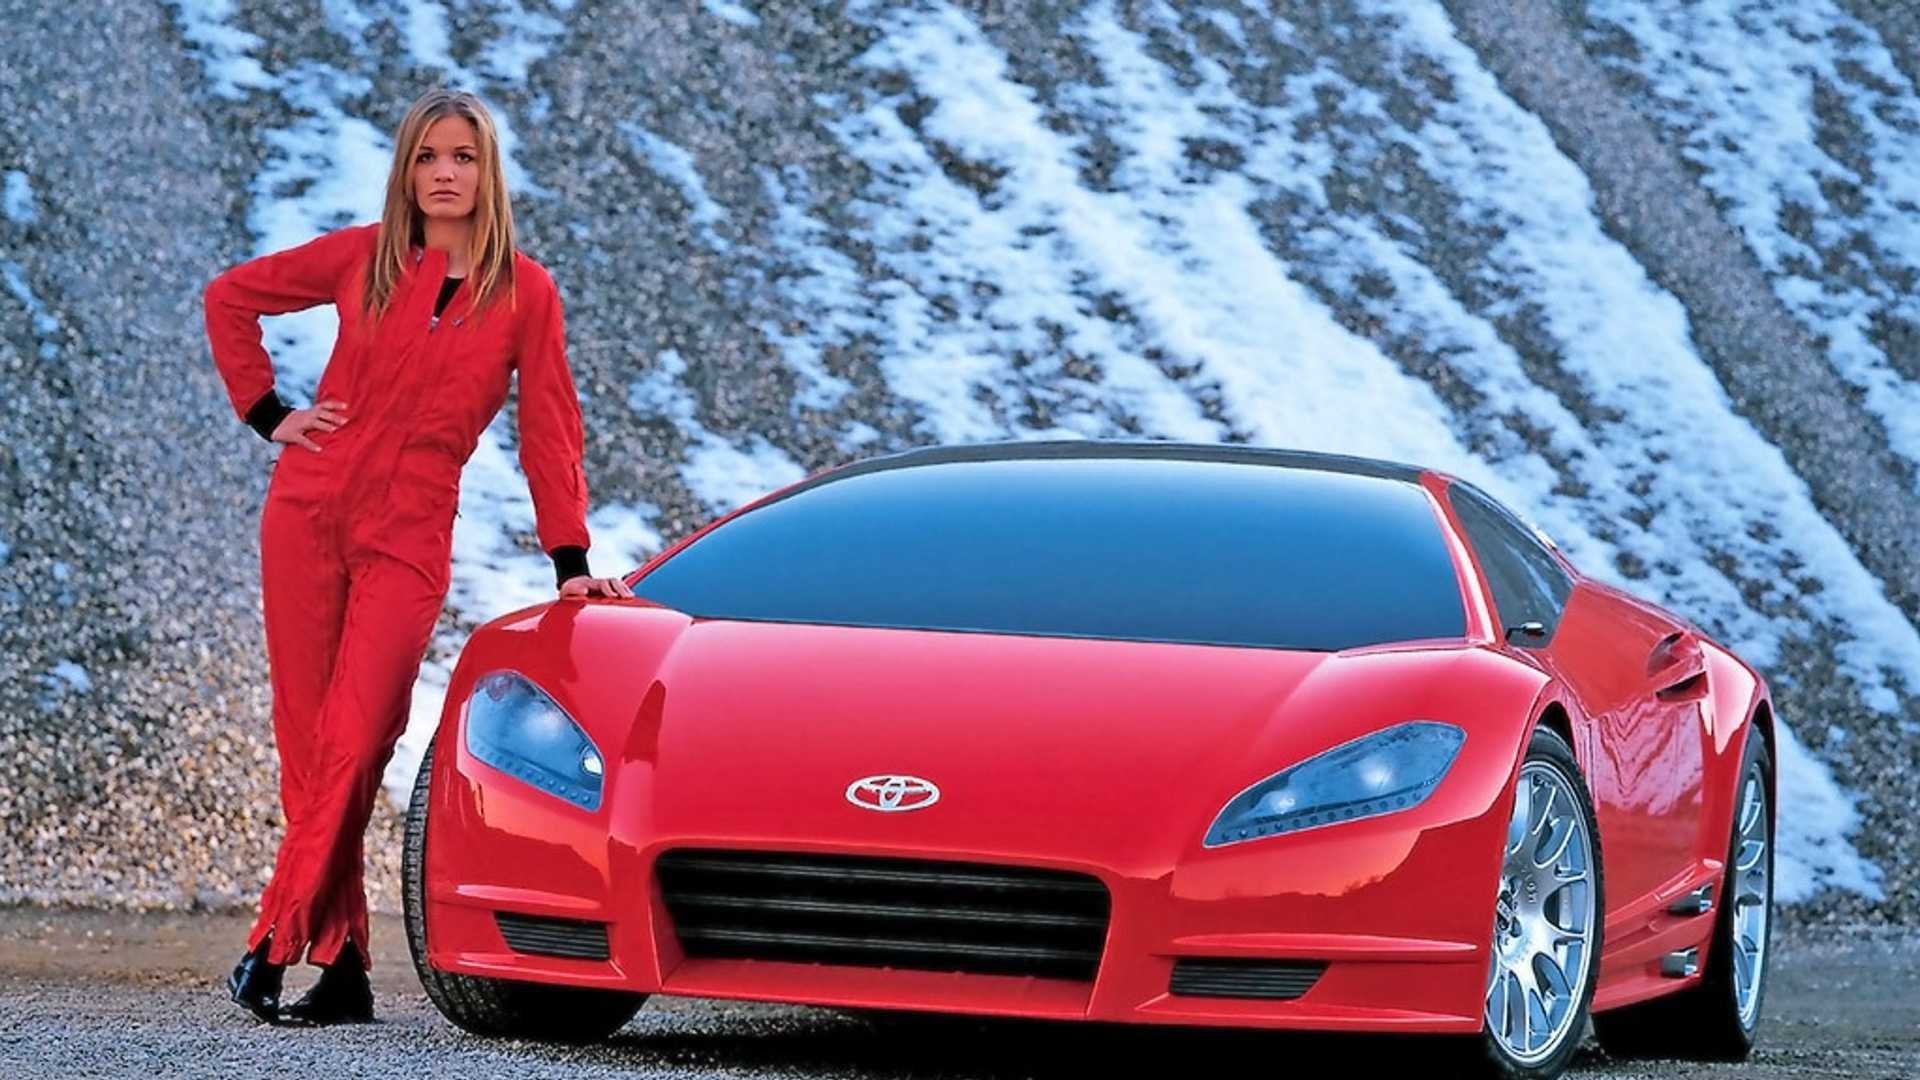 Молодые девушки с машинами. Toyota Alessandro volta Concept. Toyota Alessandro volta Concept 2004. Красивые машины. Красивые женские машины.